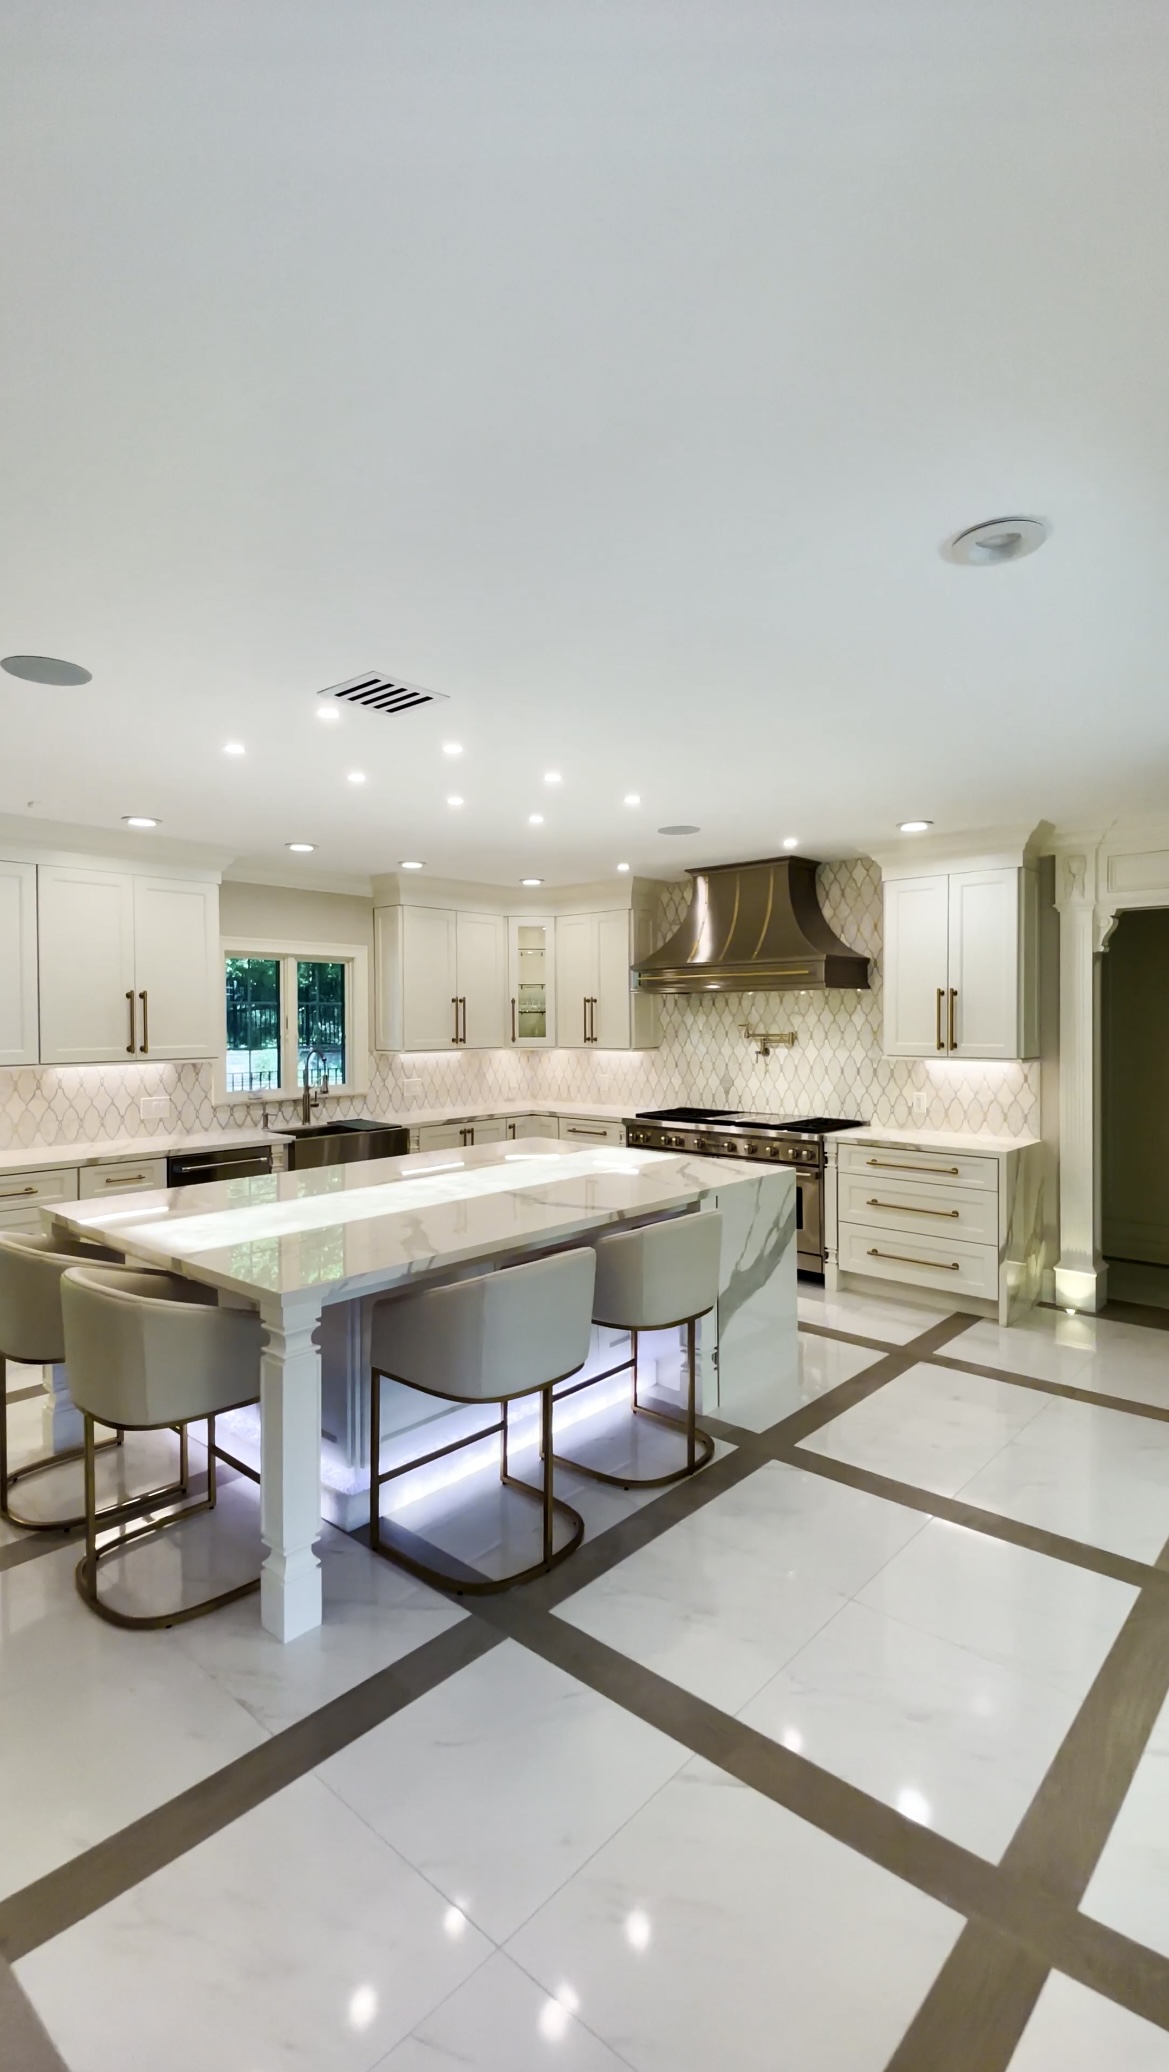 Perfect kitchen design idea, including a french-inspired ,white kitchen cabinets, marble kitchen countertops,a charming brick backsplash, unique kitchen table idea